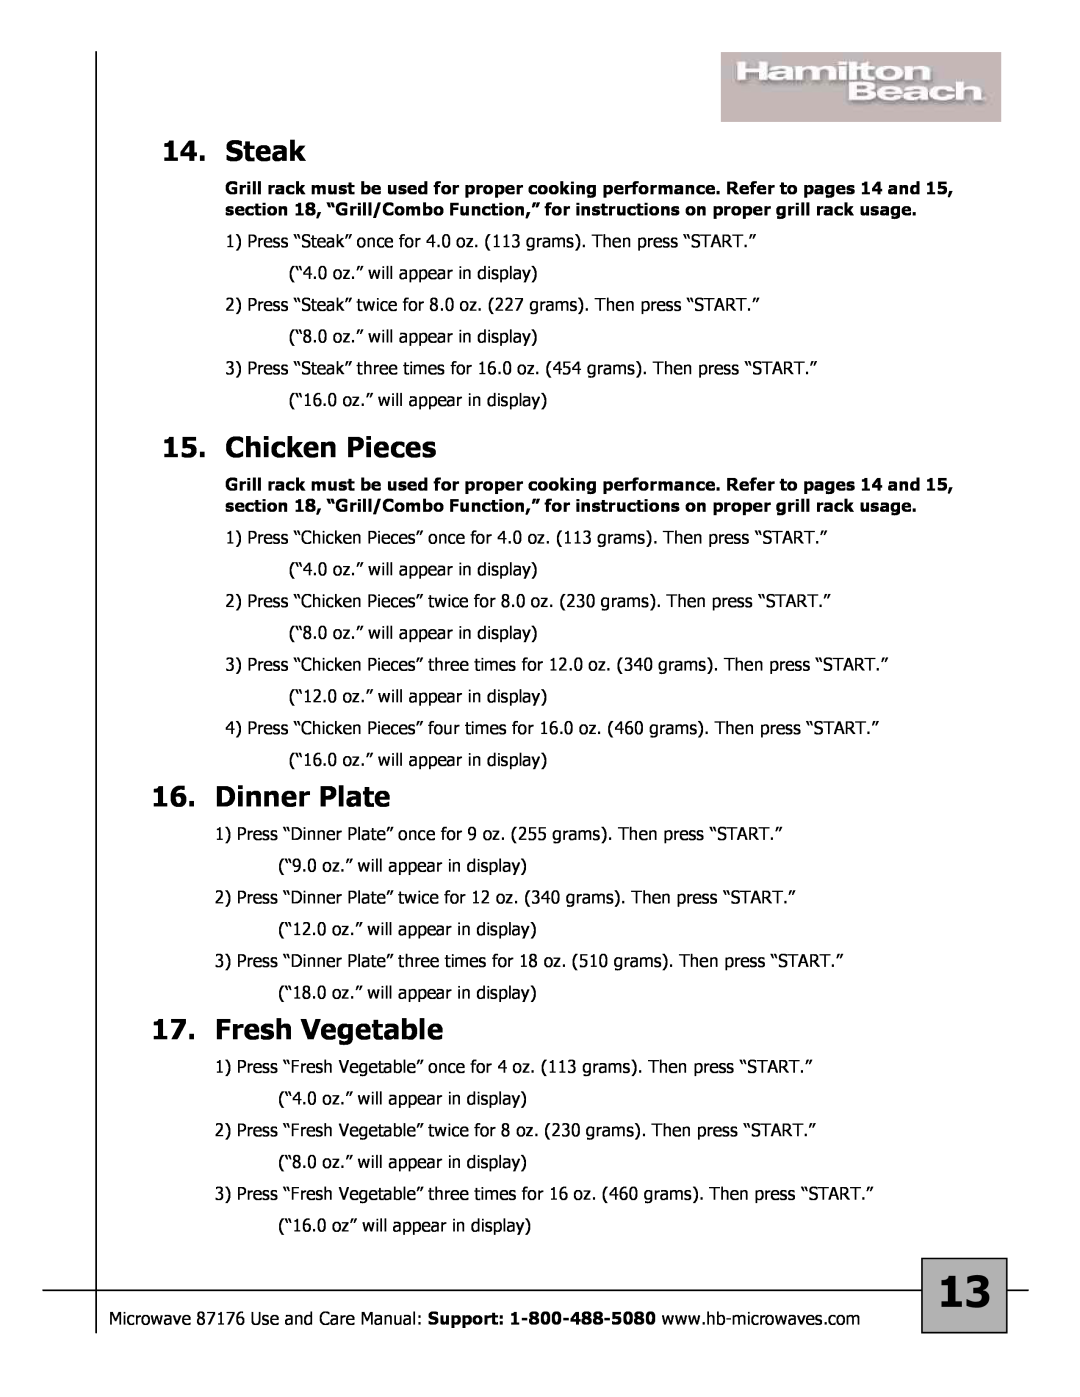 Hamilton Beach 87176 owner manual Steak, Chicken Pieces, Dinner Plate, Fresh Vegetable 